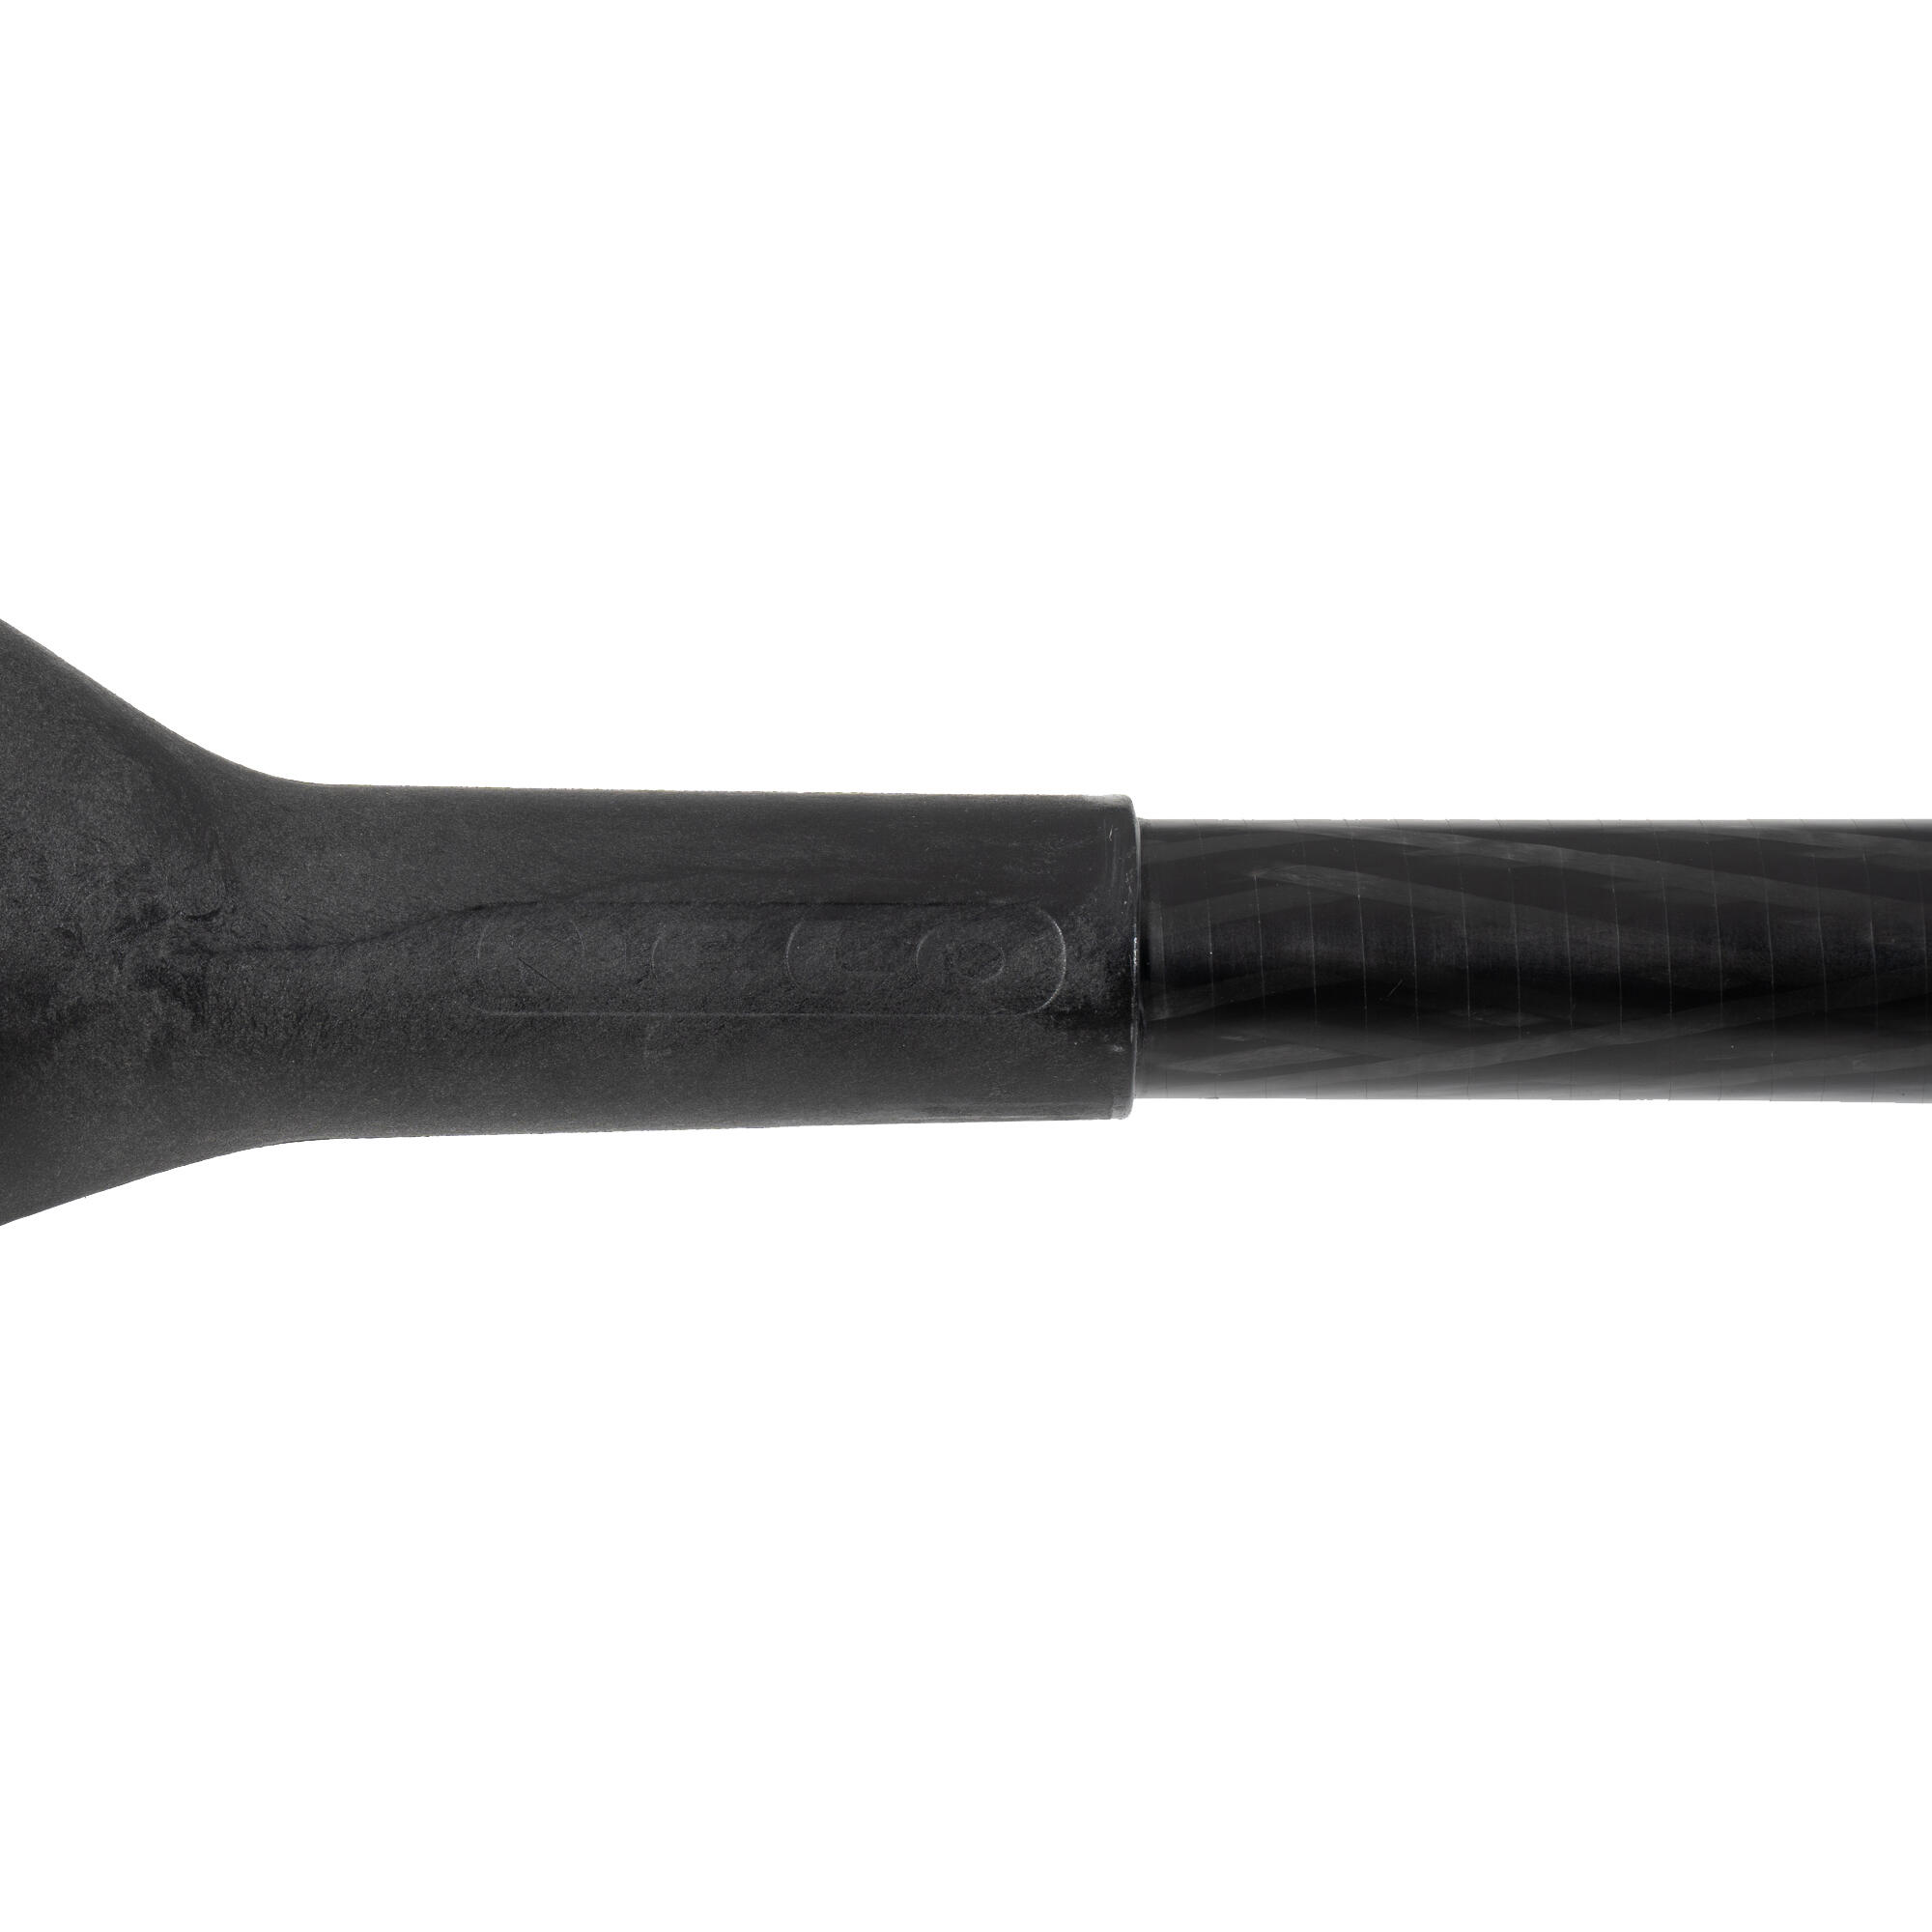 Kayak spoon paddle - carbon and fibreglass - adjustable / 2 sections - Rotomod 13/13